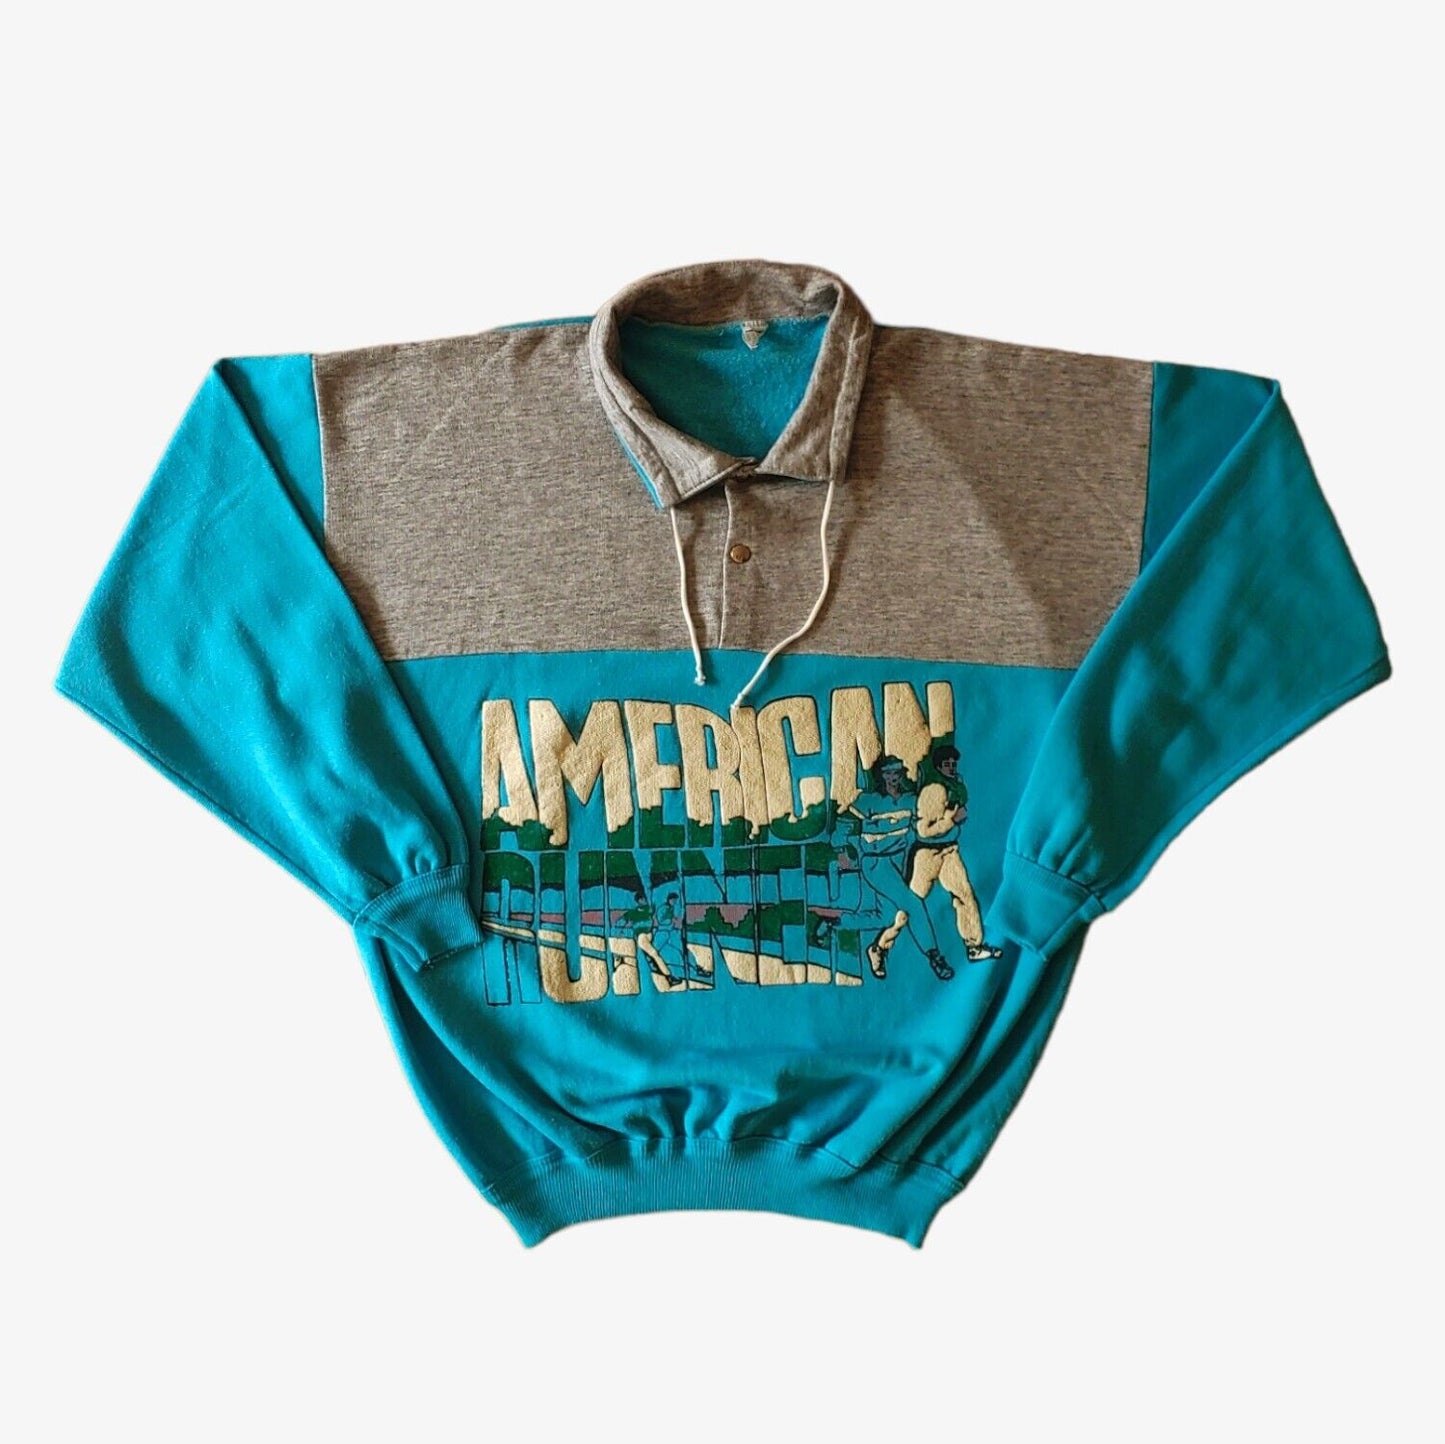 Vintage 80s American Runner 3D Textured Spell Out Graphic Collared Sweatshirt - Casspios Dream